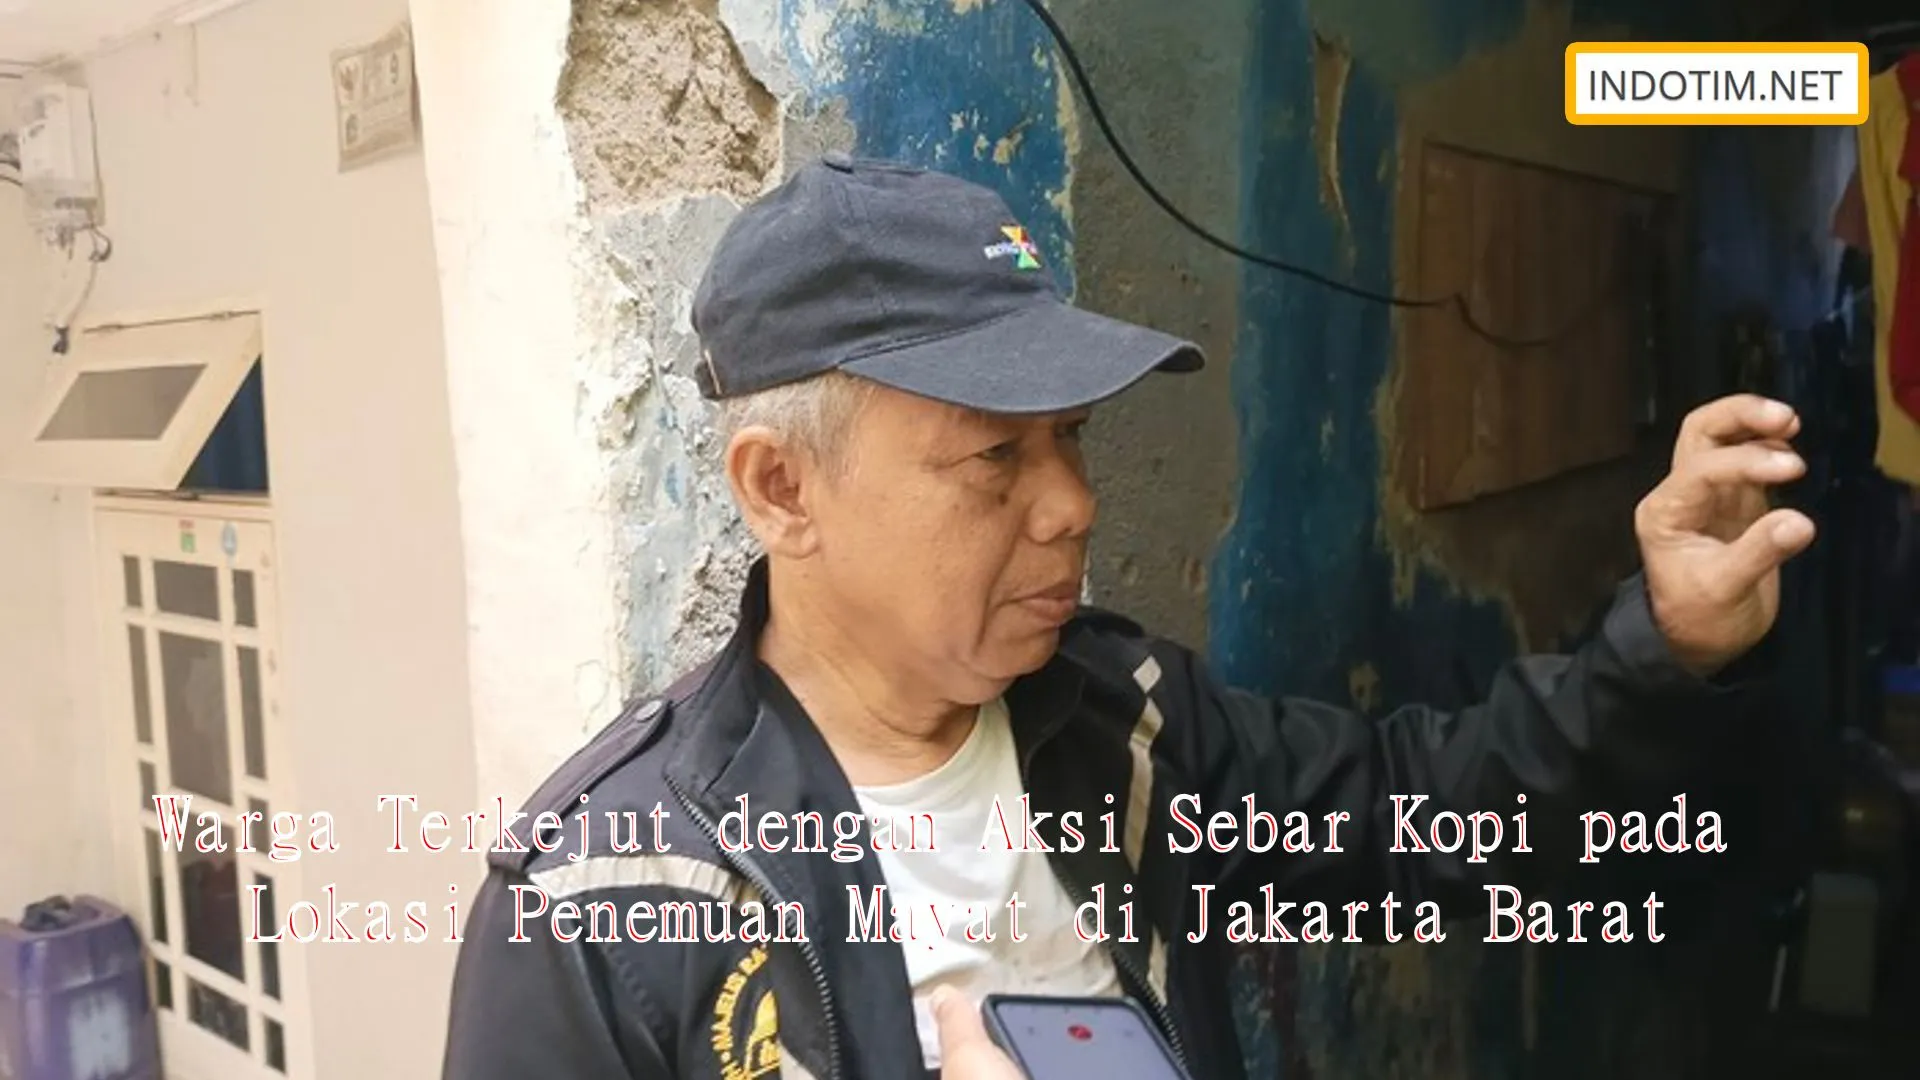 Warga Terkejut dengan Aksi Sebar Kopi pada Lokasi Penemuan Mayat di Jakarta Barat